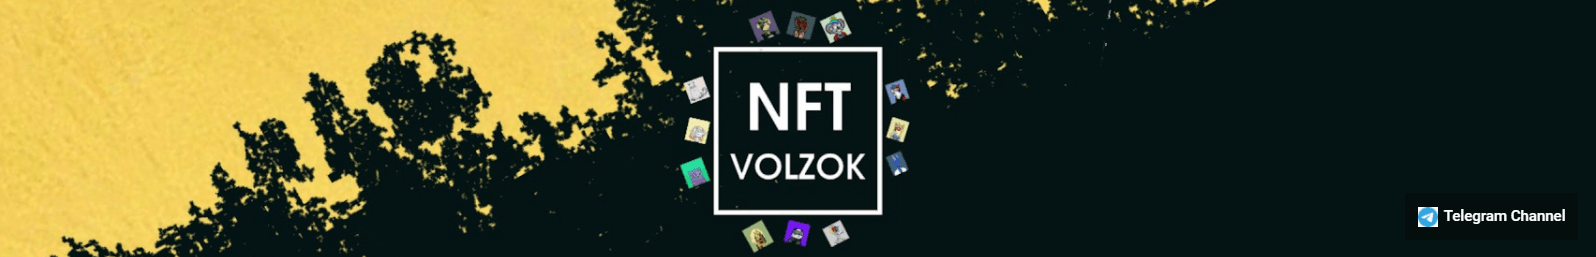 volzook_DMFORPRIVATESALE banner